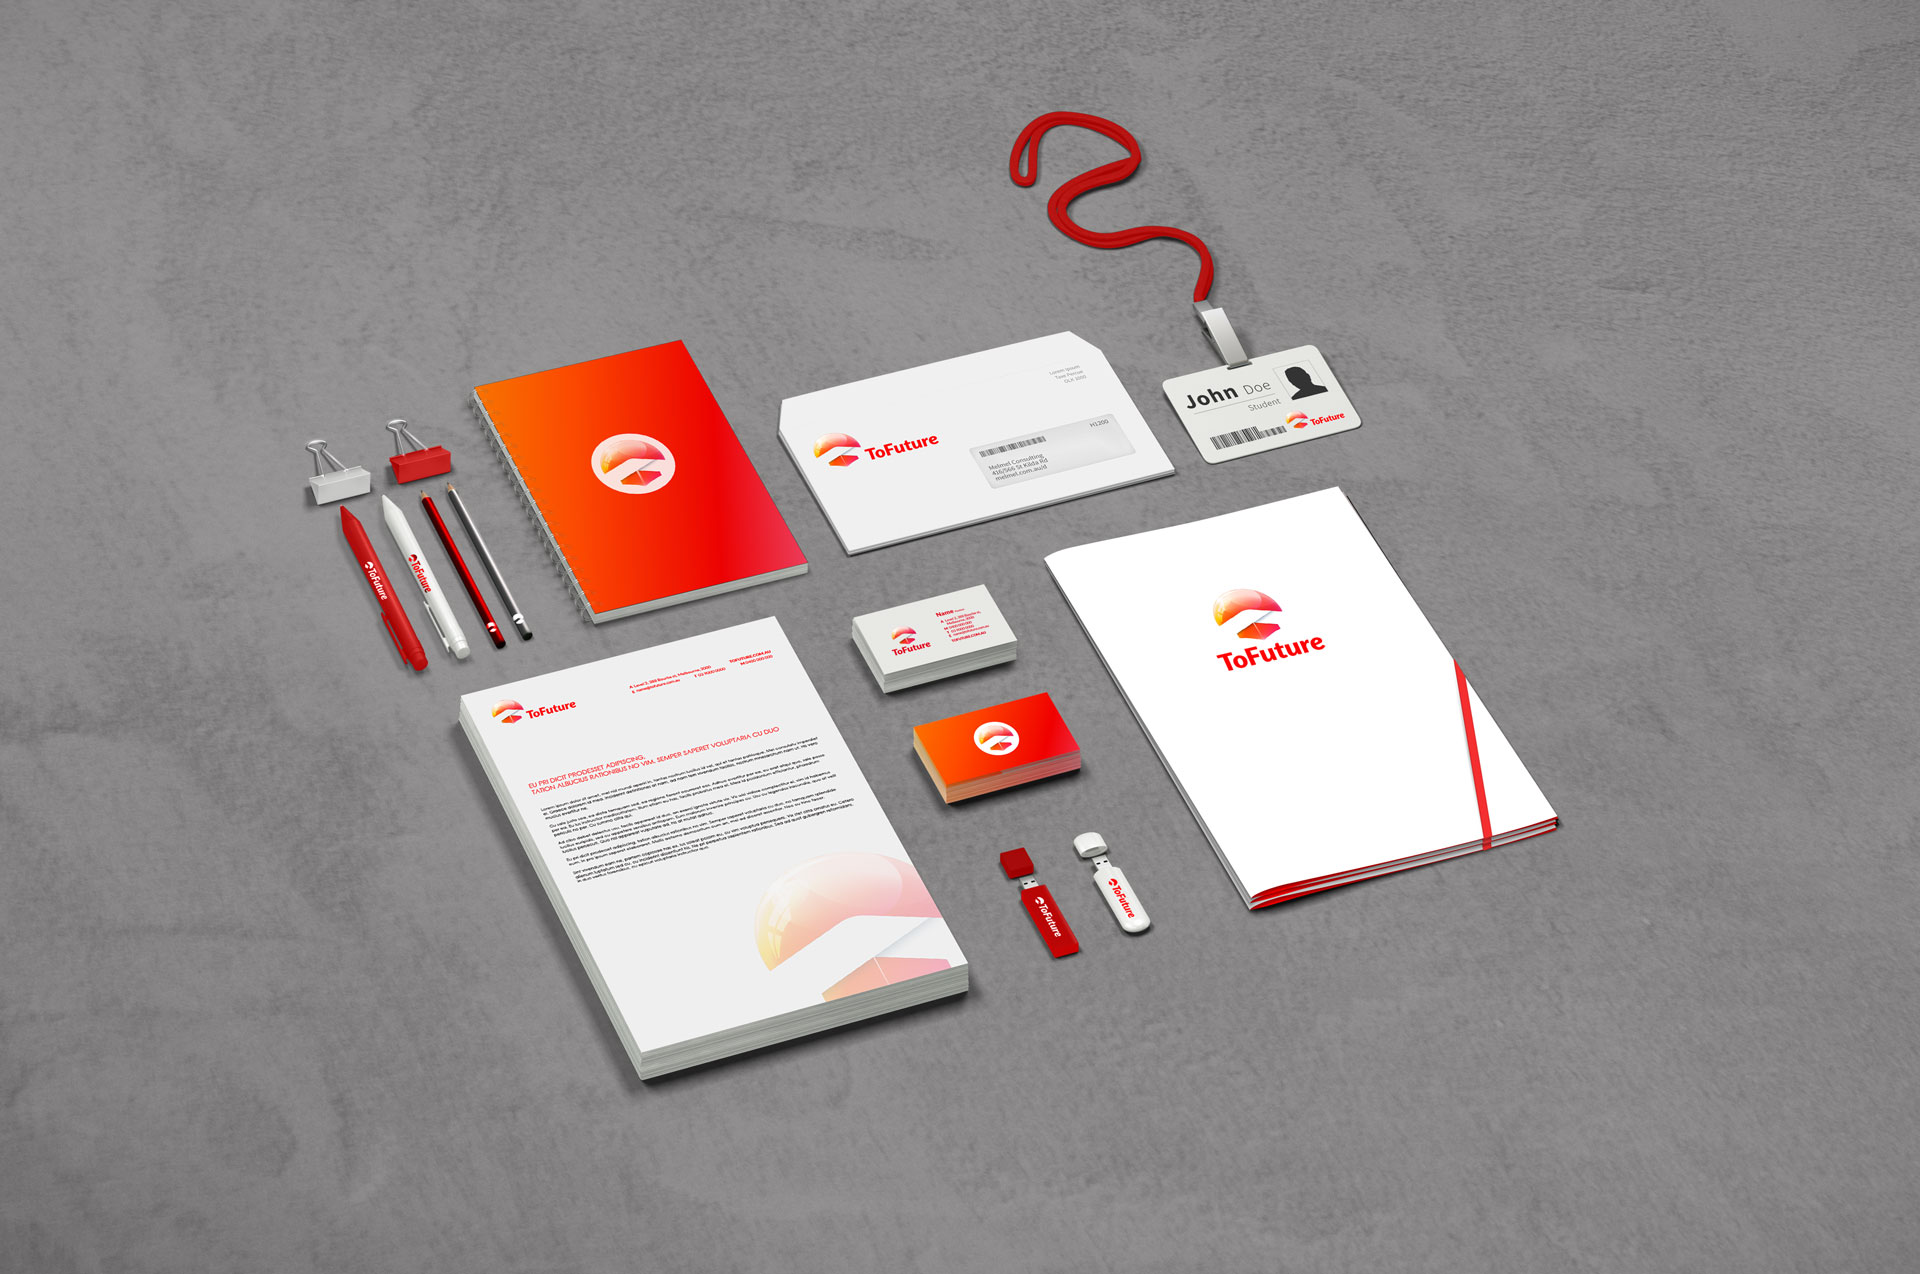 education branding by Z Creative Studio Branding & Graphic Design Melbourne